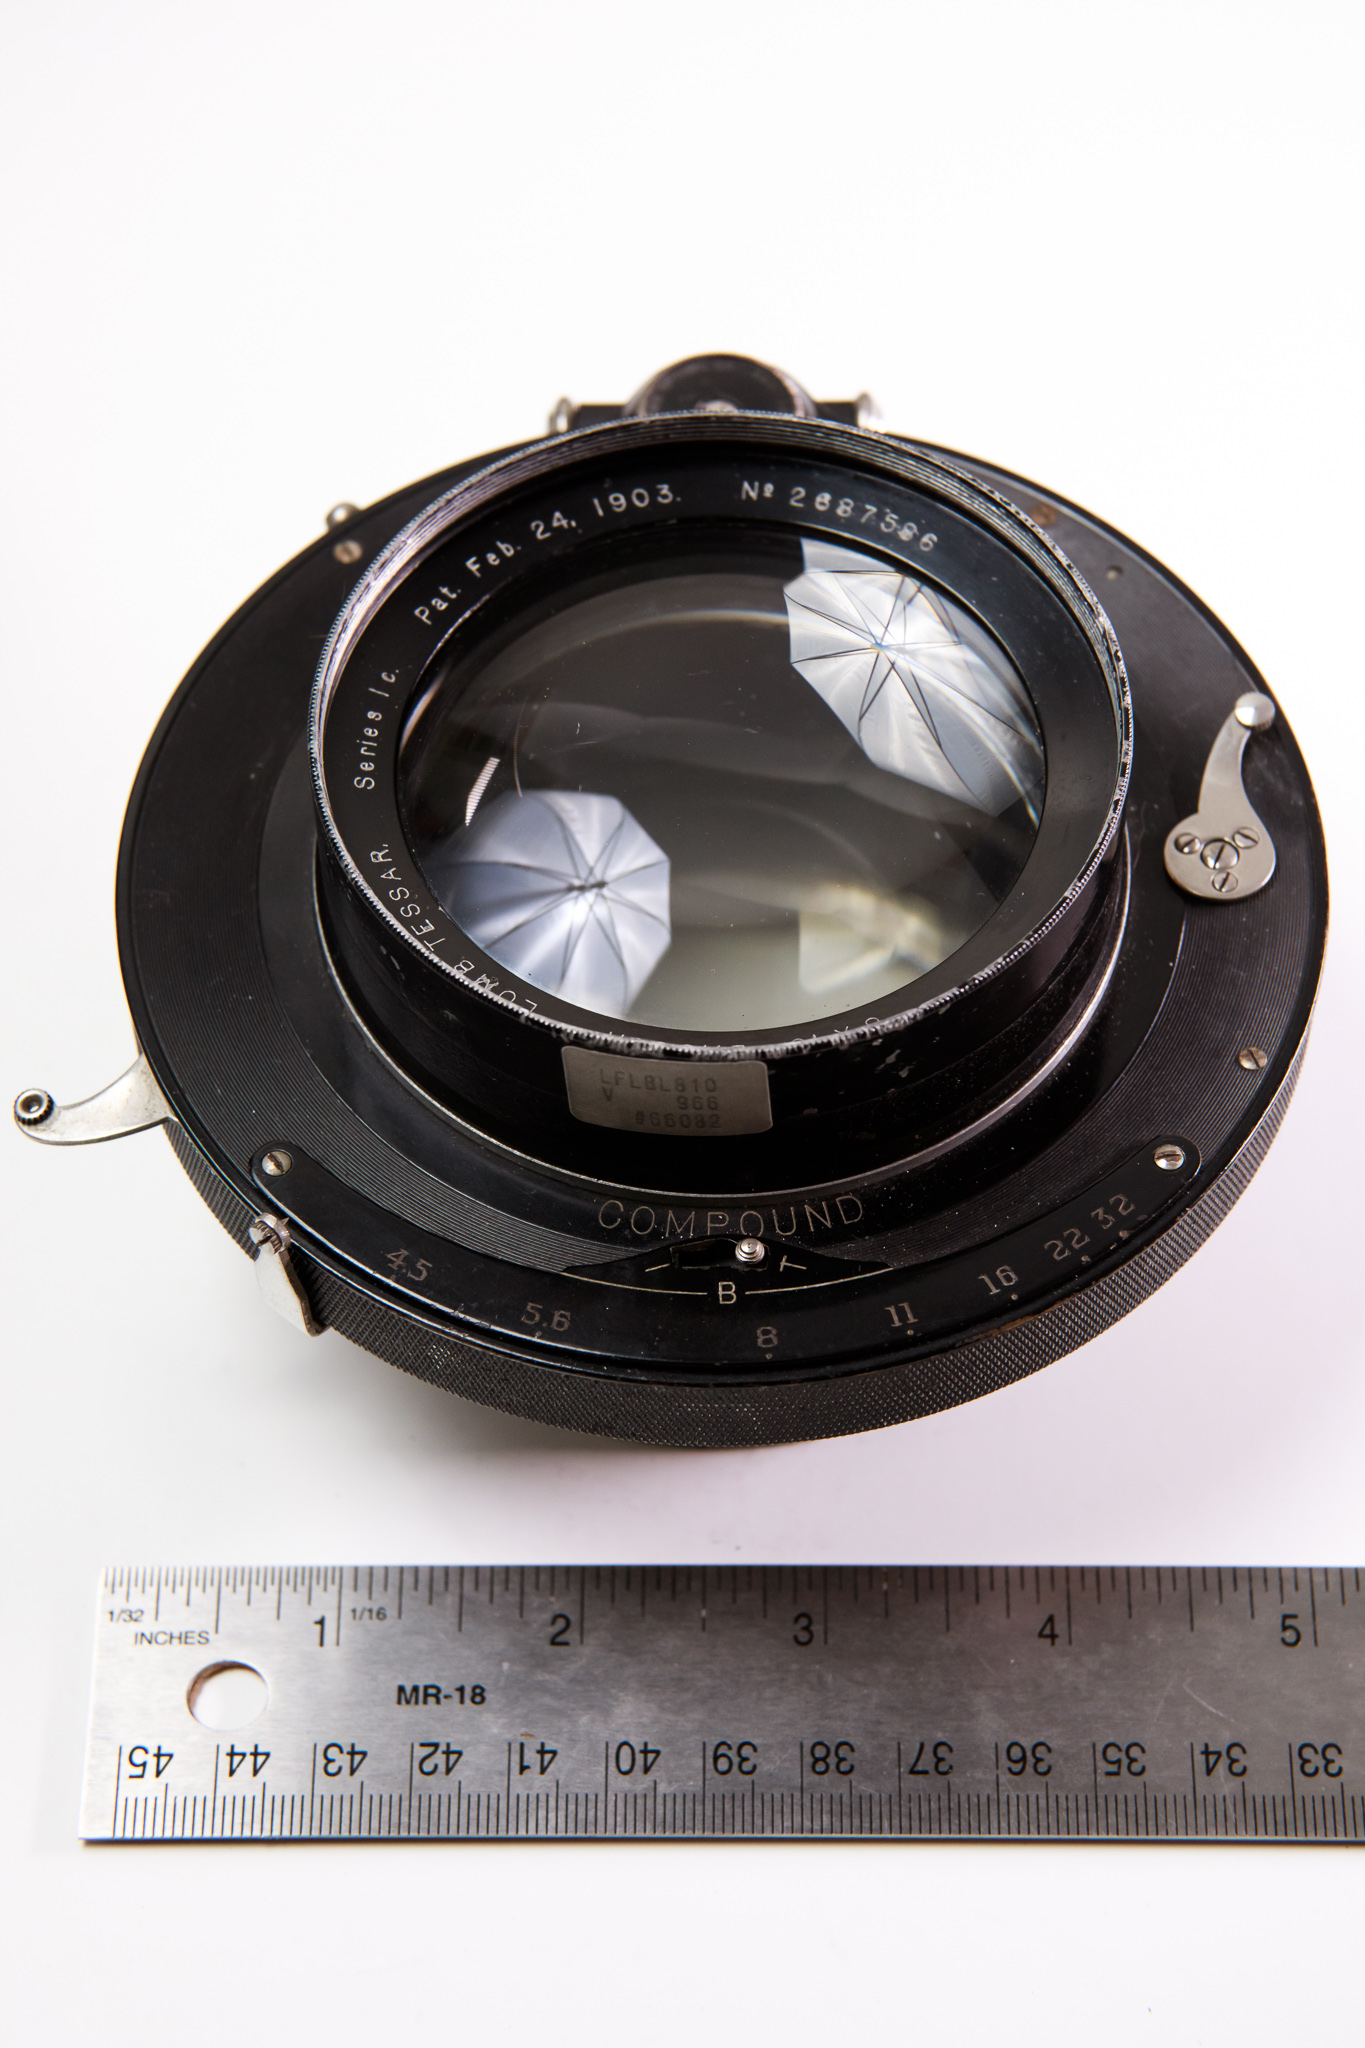 Bausch & Lomb Tessar 1c 8x10 lens in Compound V shutter